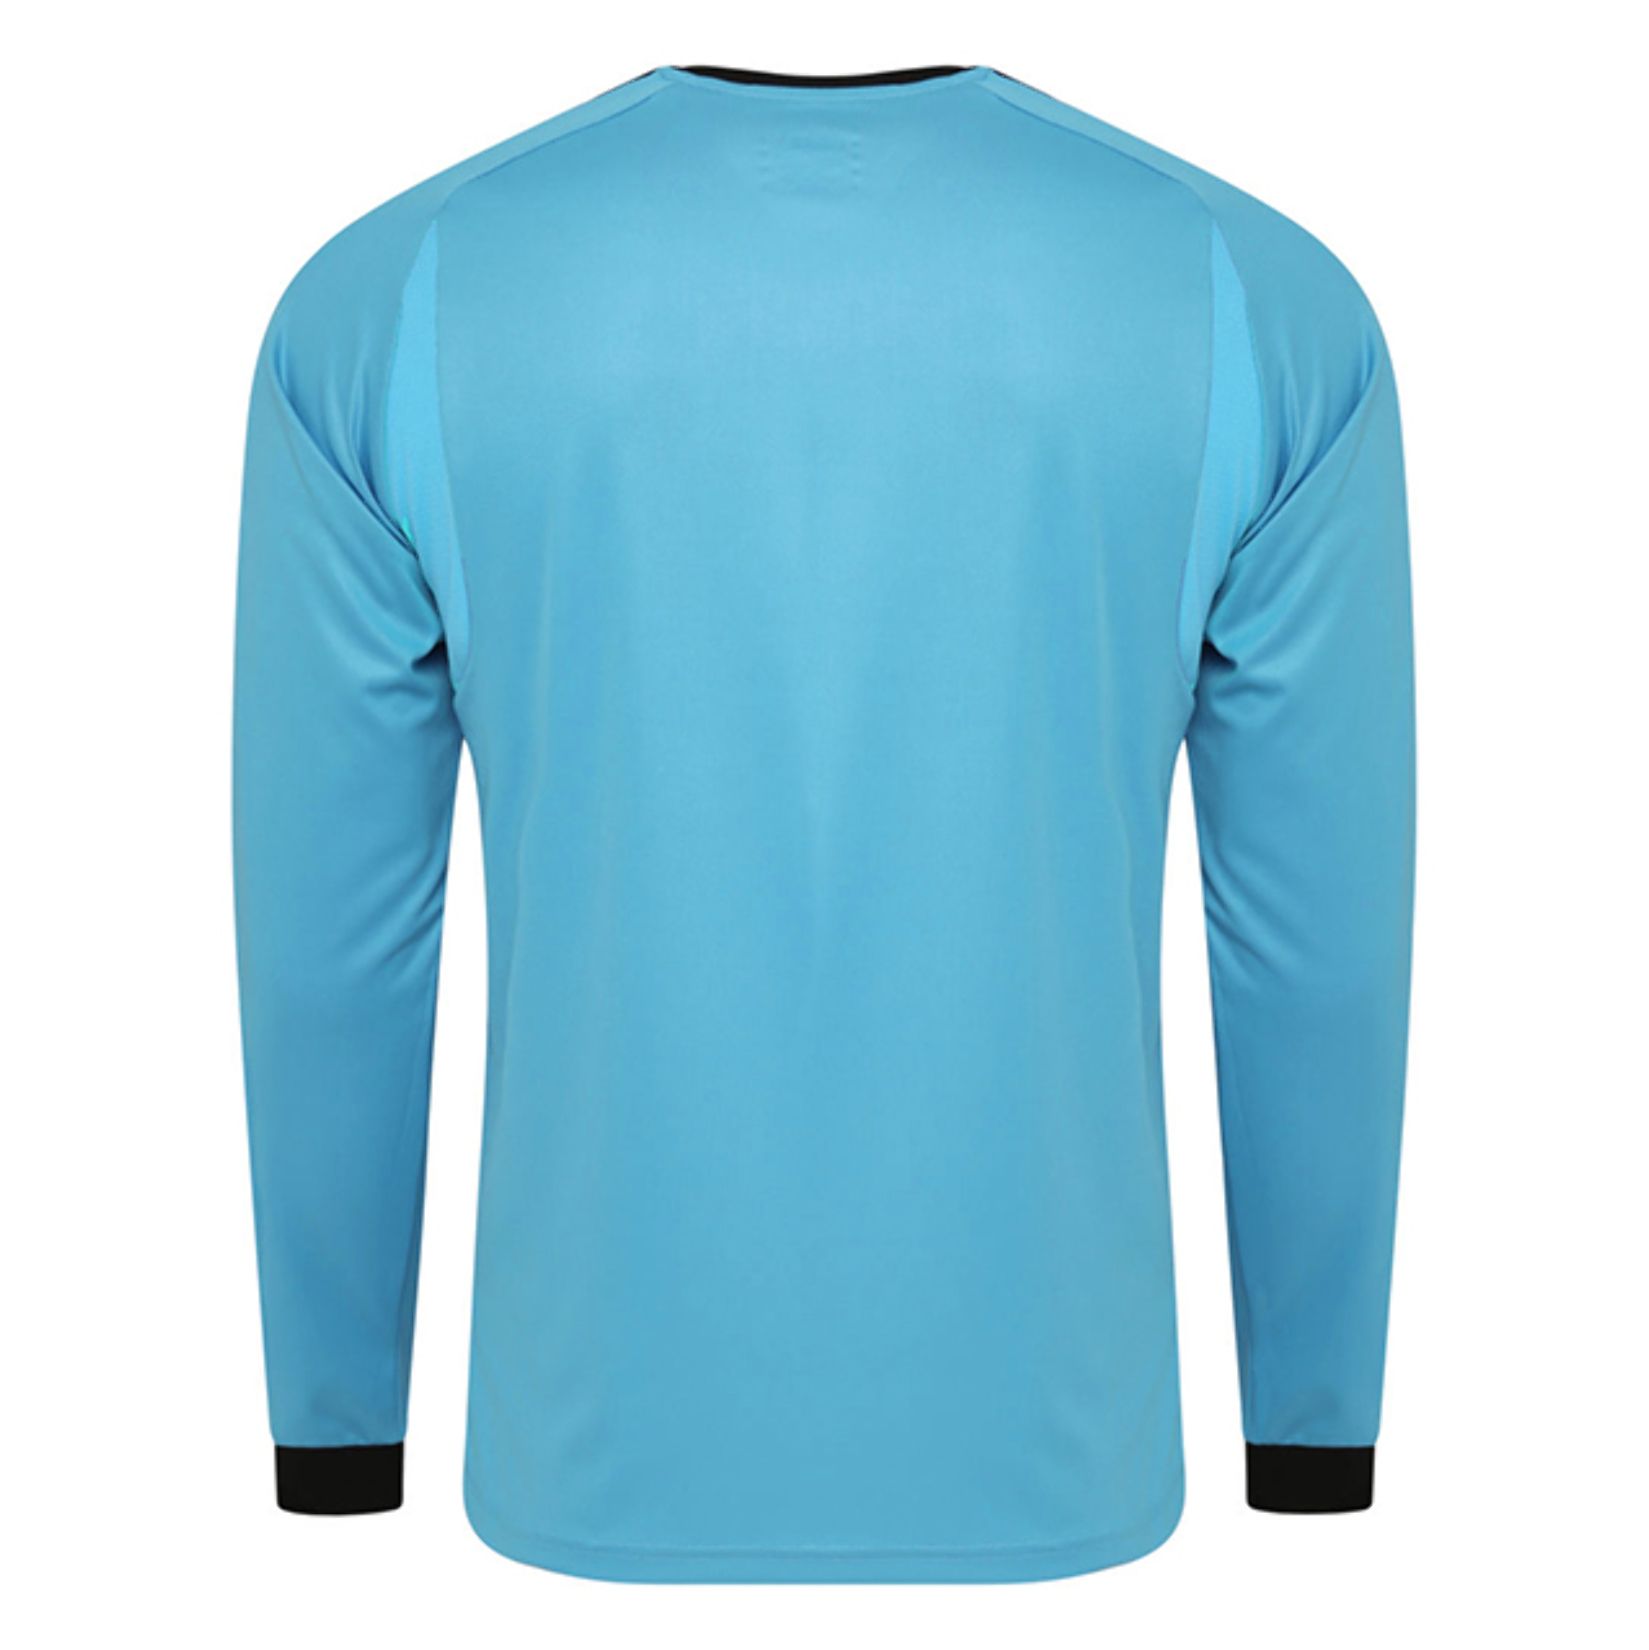 Puma Liga Goalkeeper Shirt - Kitlocker.com